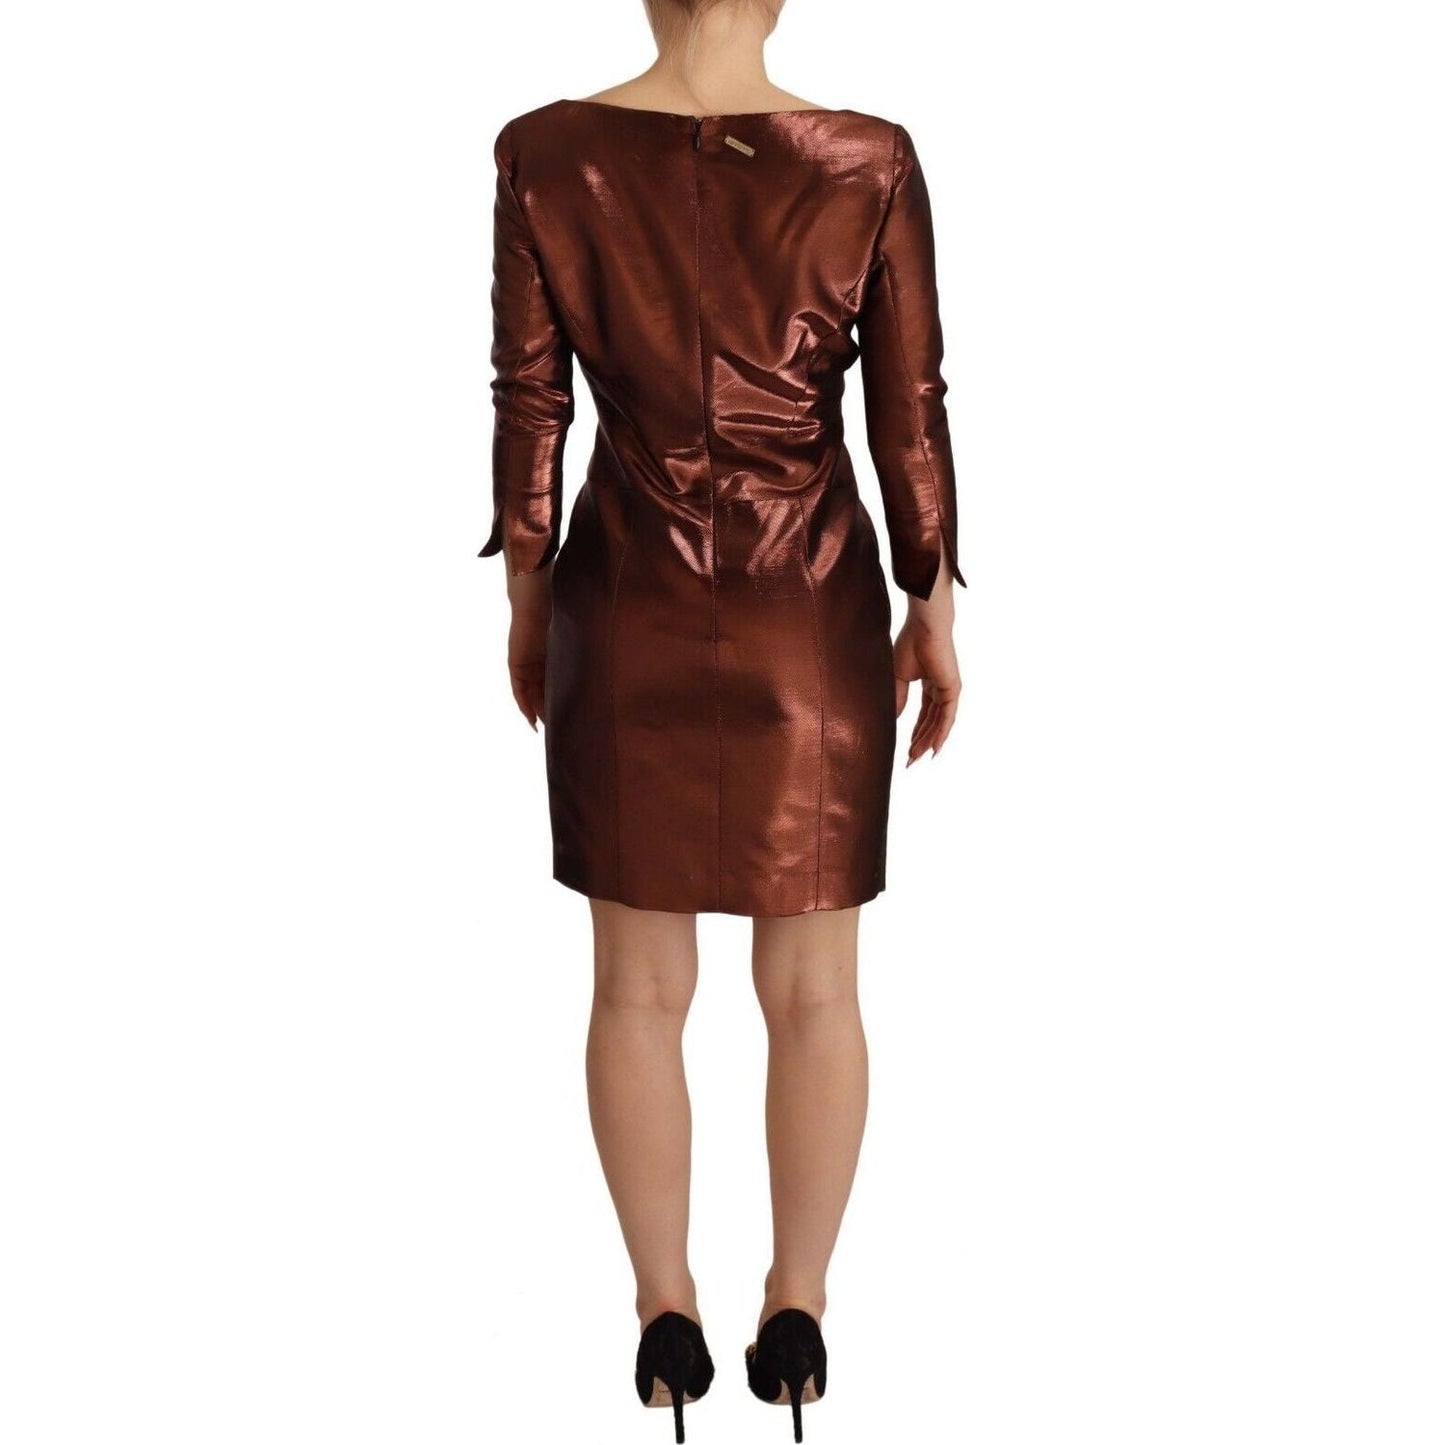 GF Ferre Elegant Bronze Sheath Mini Dress with Square Neck metallic-brown-long-sleeves-square-neck-sheath-dress s-l1600-2-84-5f8a7638-627.jpg